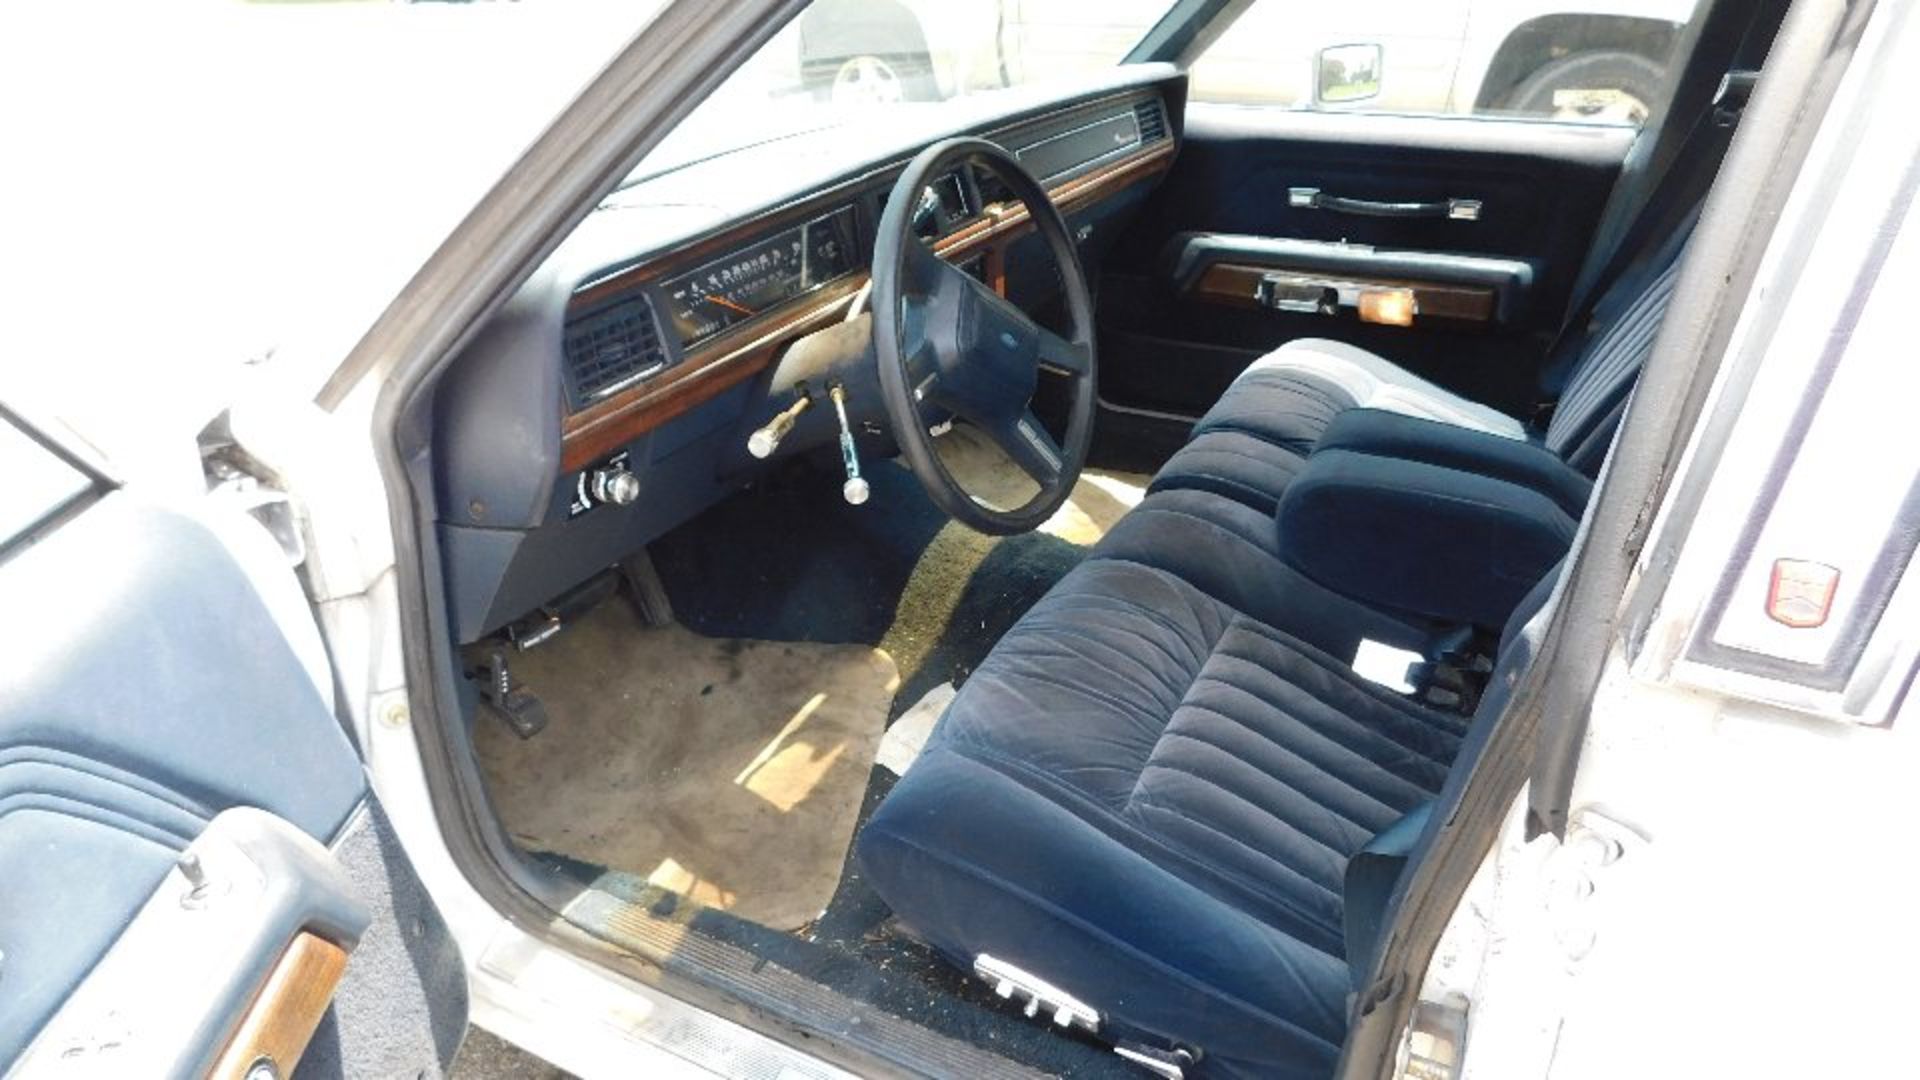 1988 Ford LTD Crown Victoria, 4-Door, Auto, Air, ODO 158,420, VIN 2FABP74F4JX223050 - Image 3 of 3